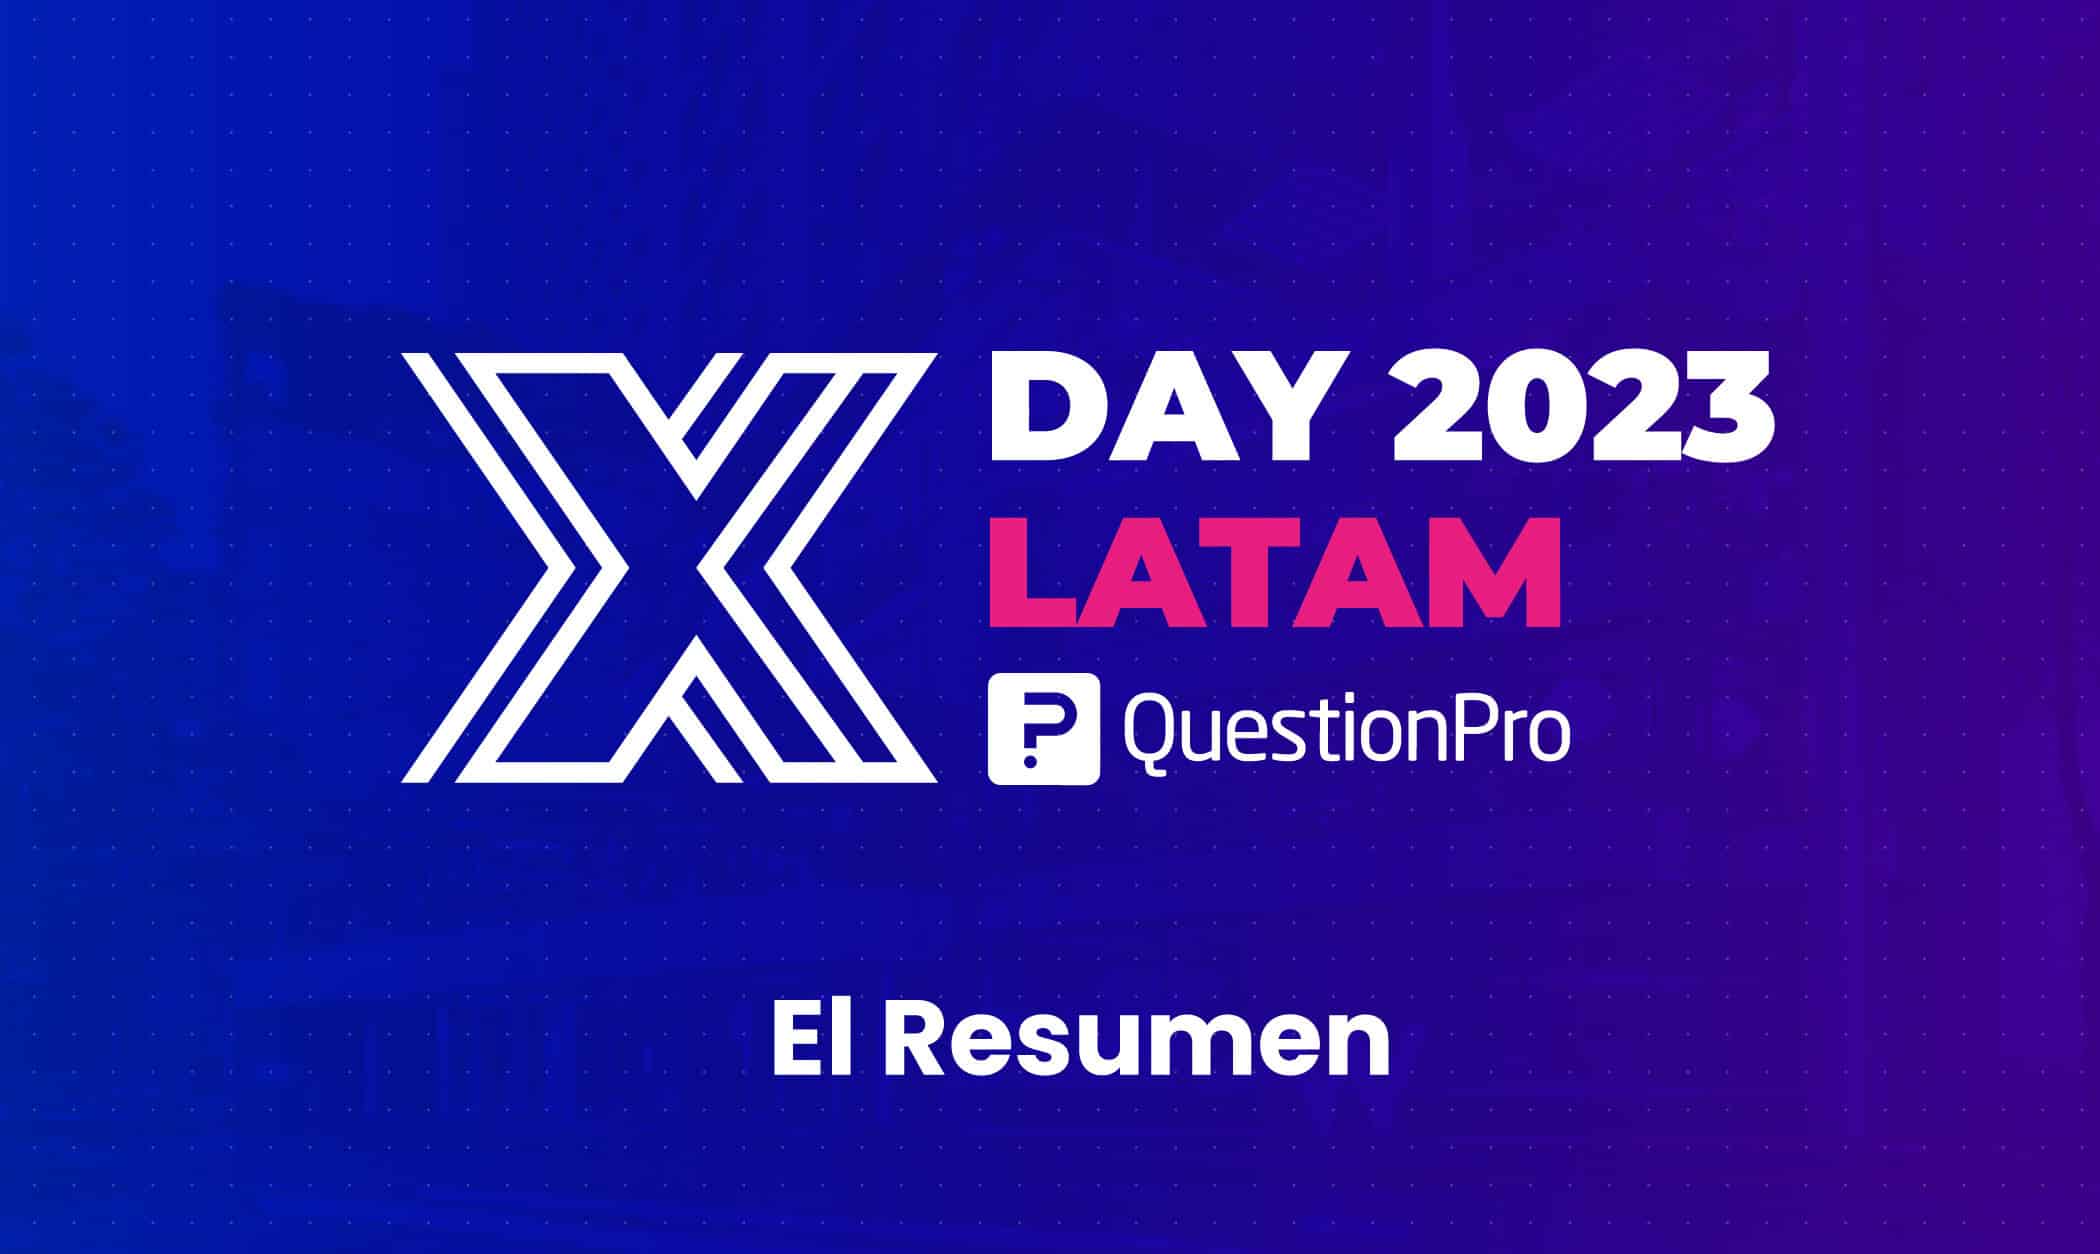 XDAY LATAM 2023